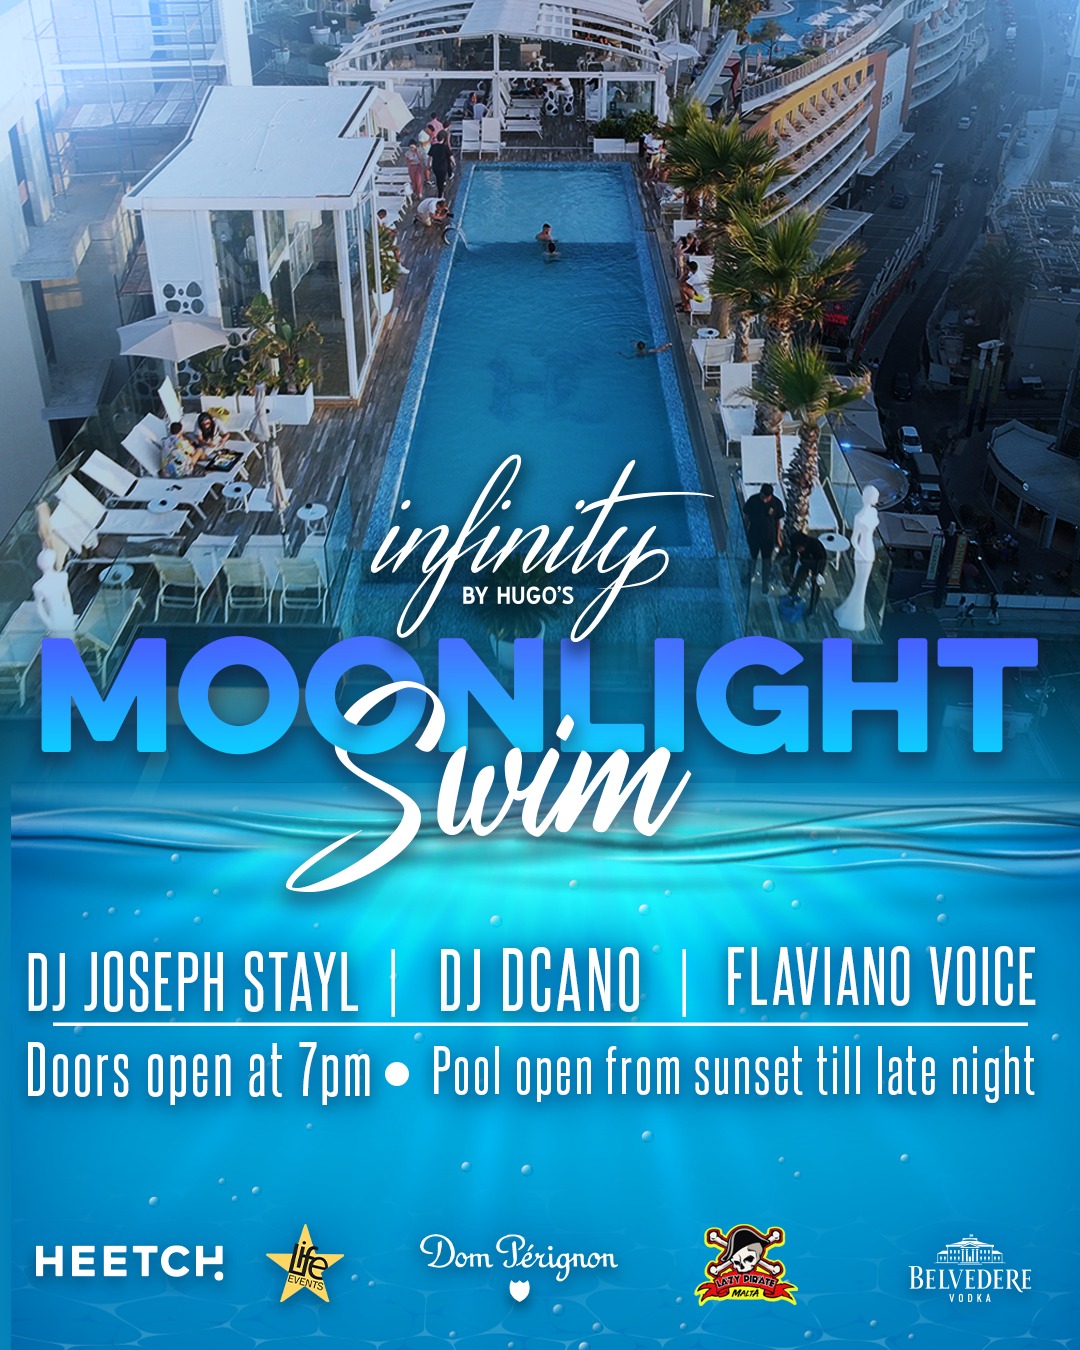 Moonlight Swim Infinity By Hugo's poster